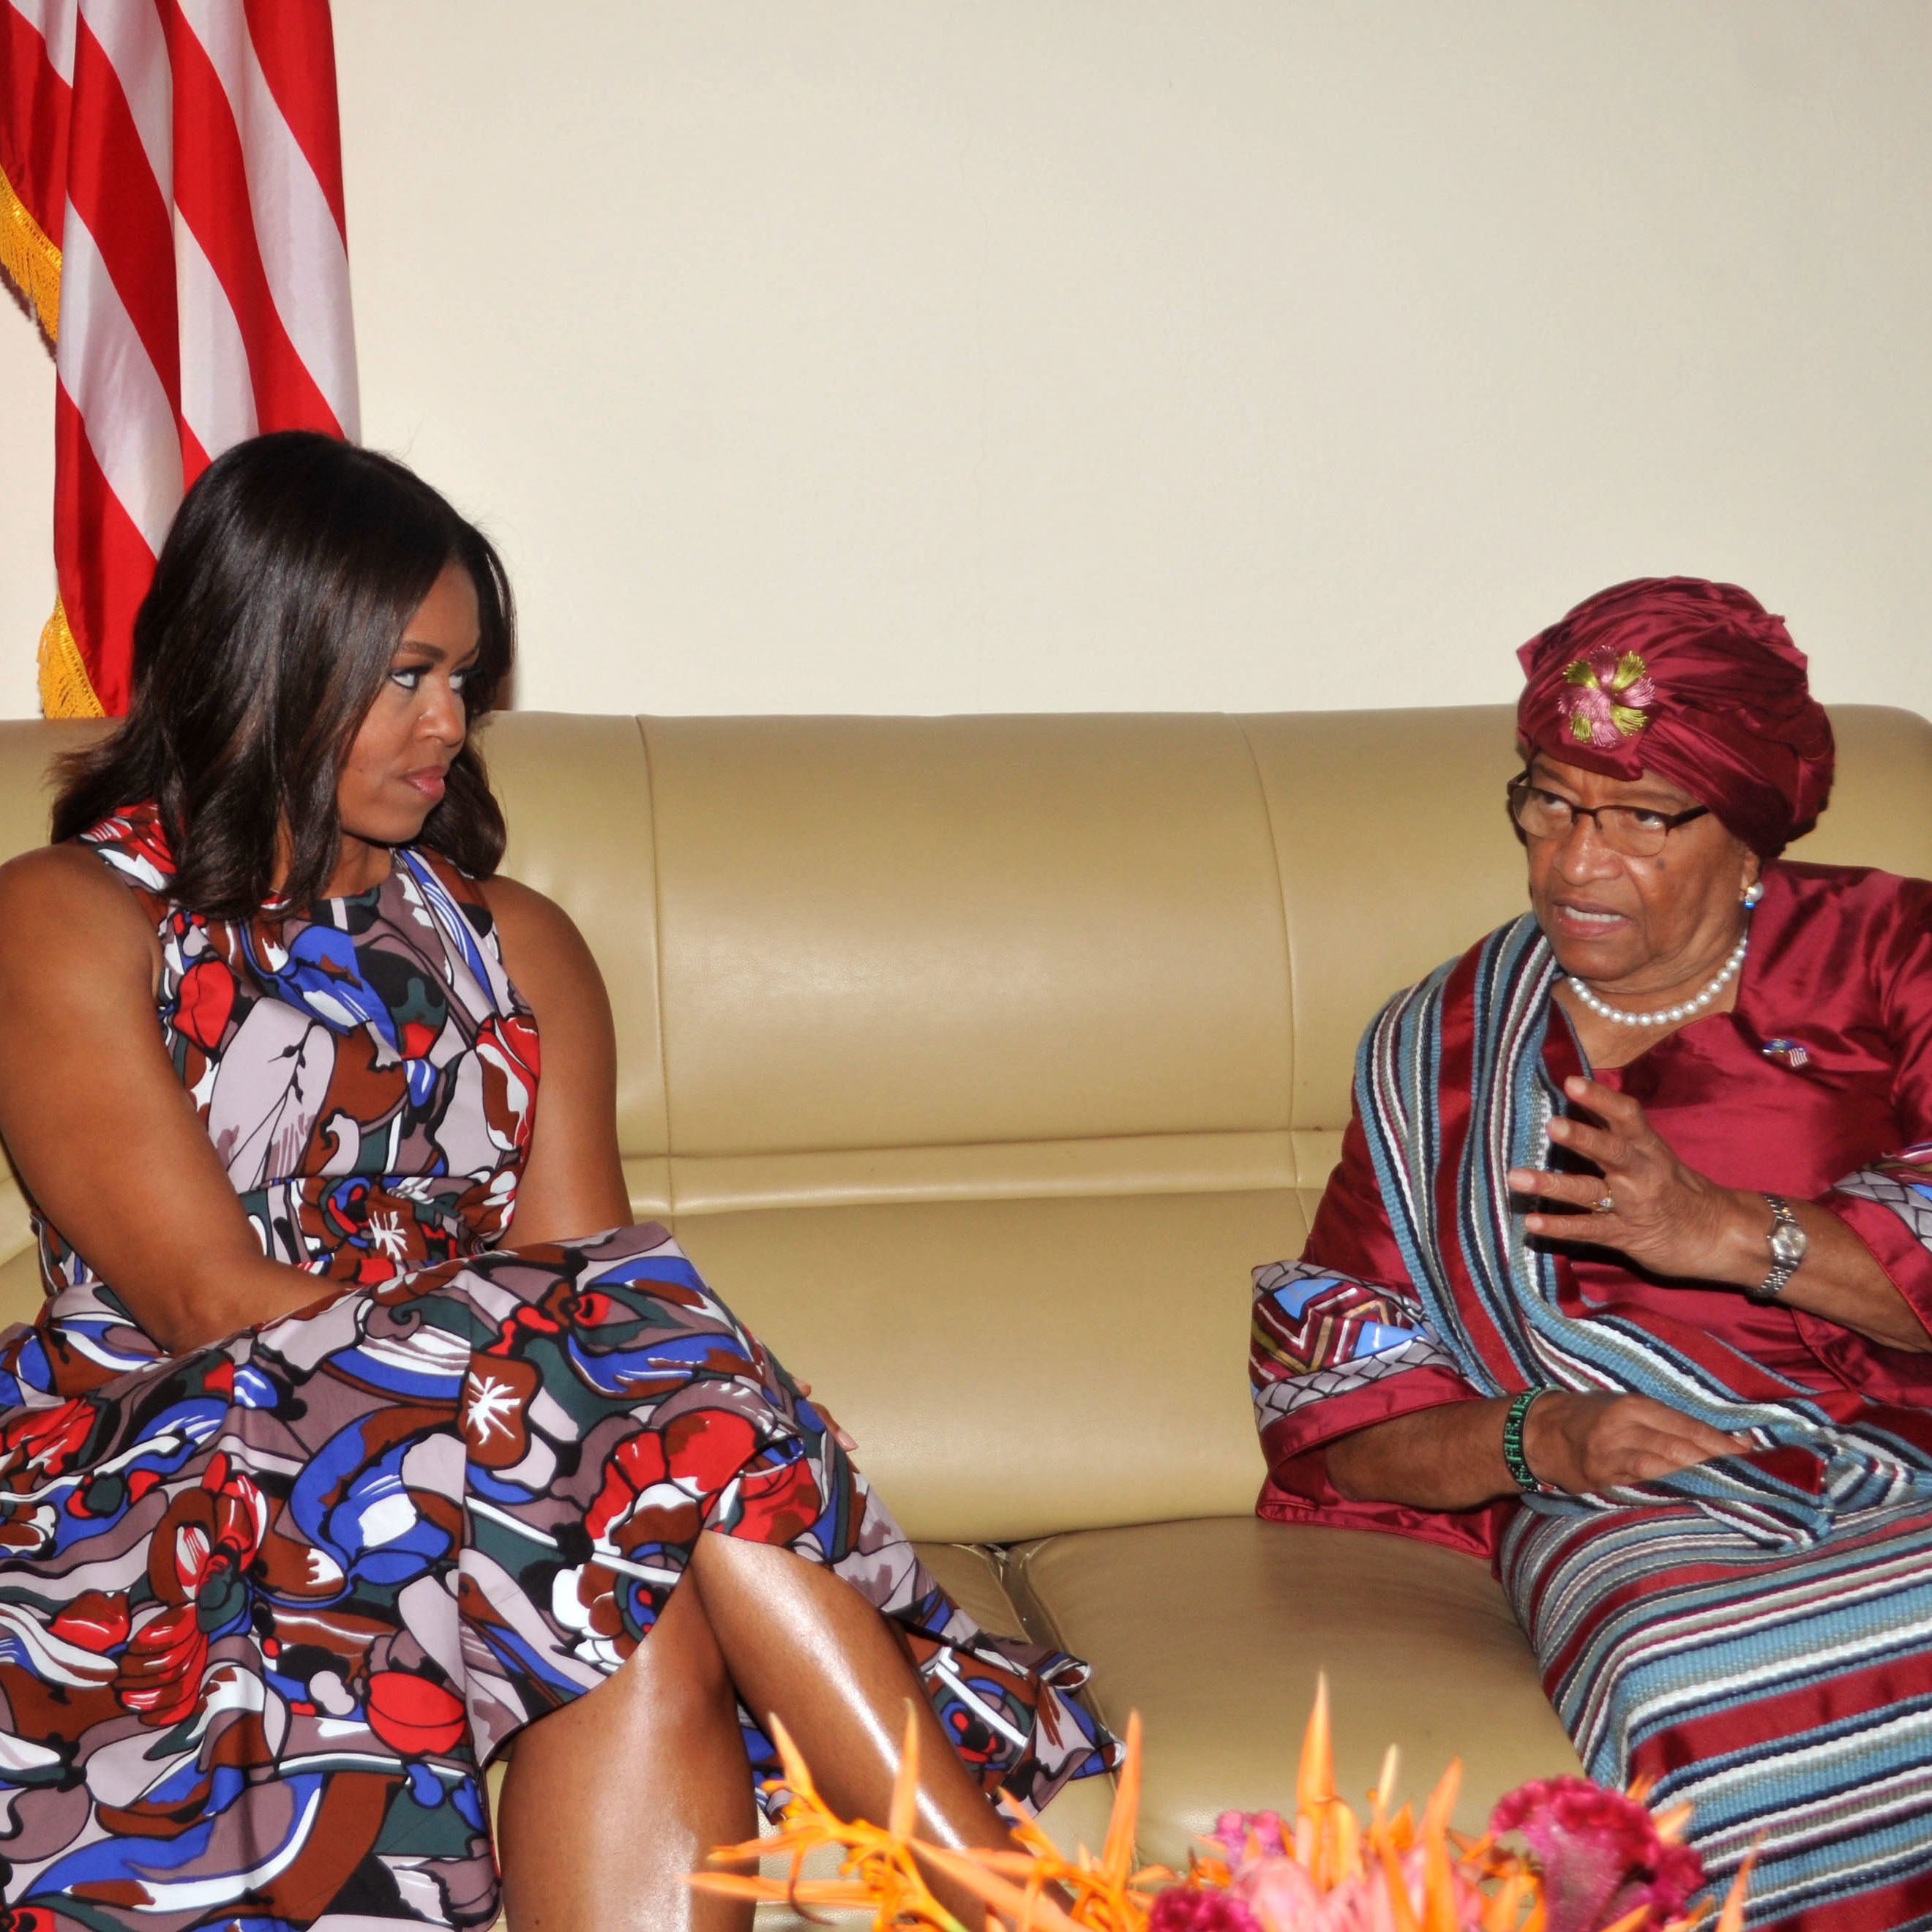 Michelle Obama's Latest Travel Adventures
